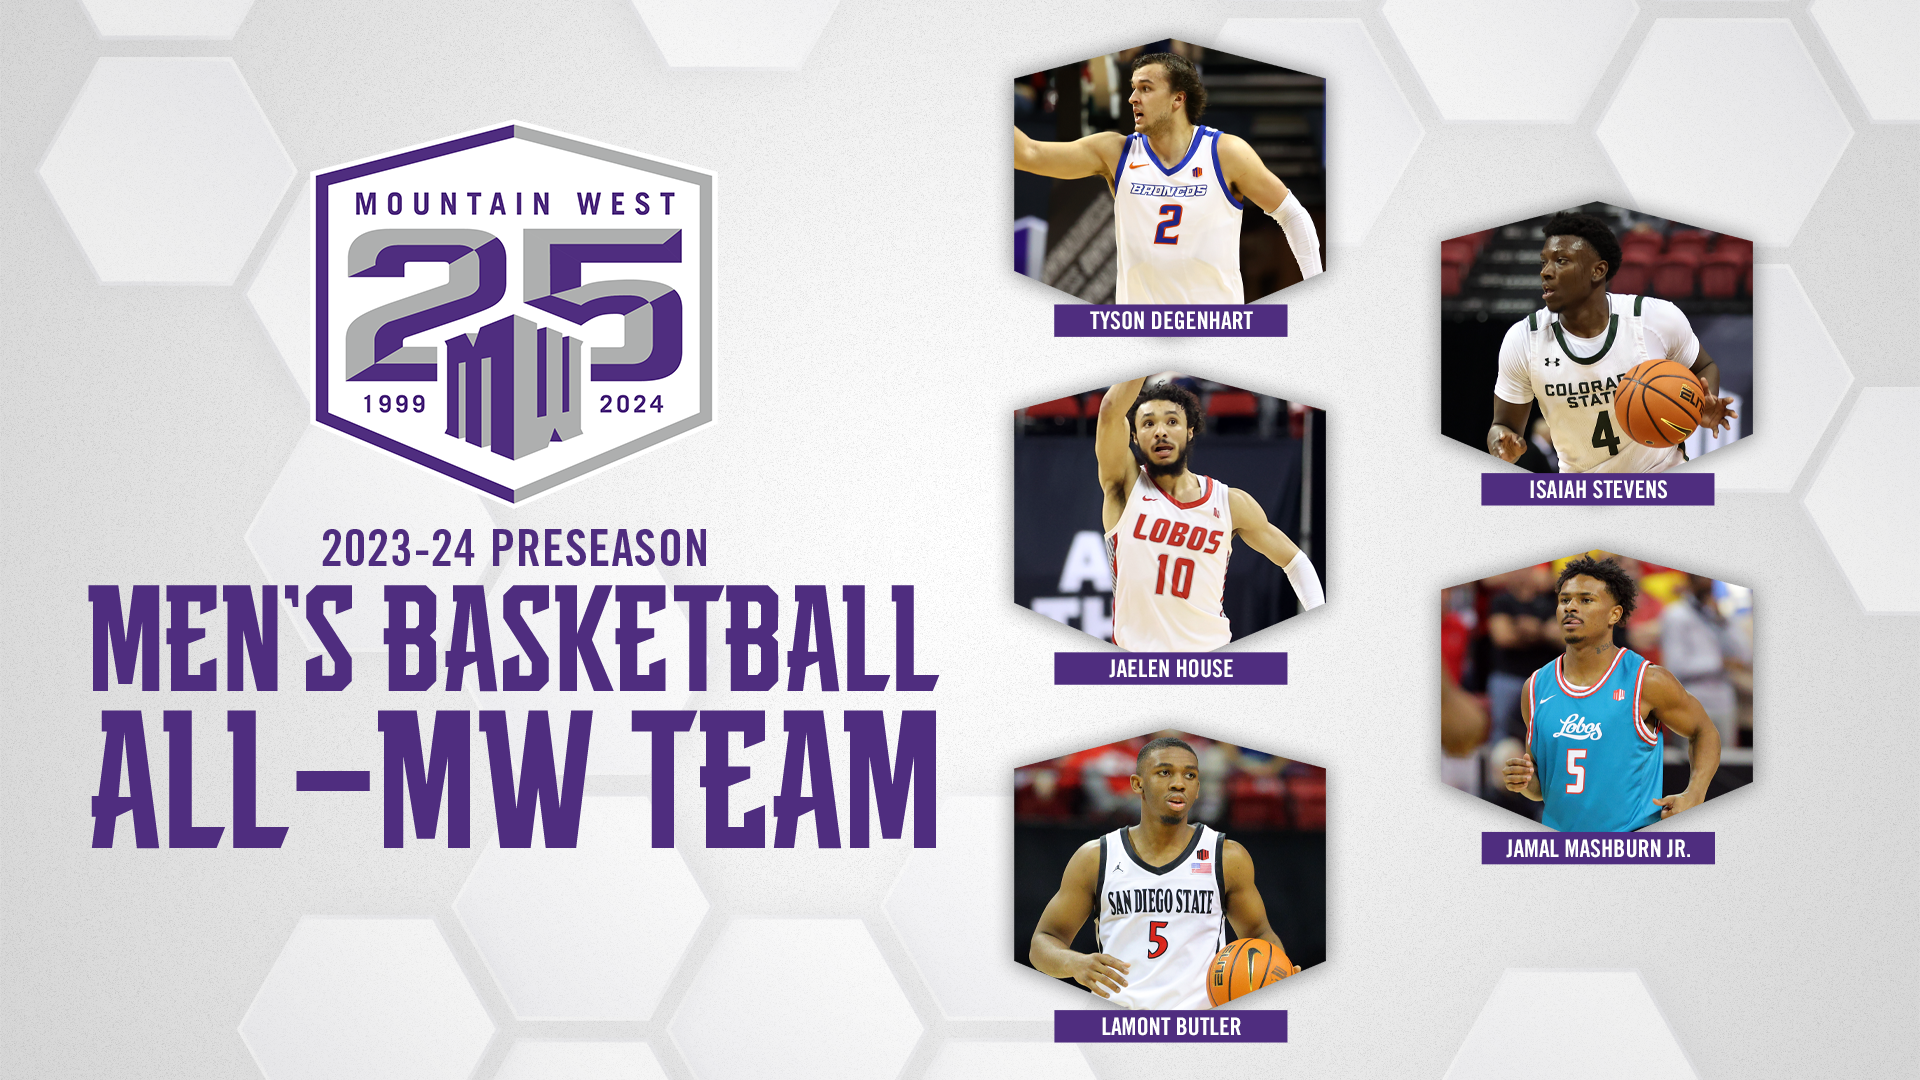 Mountain West Announces 2023-24 Preseason Men's Basketball All-Conference Team